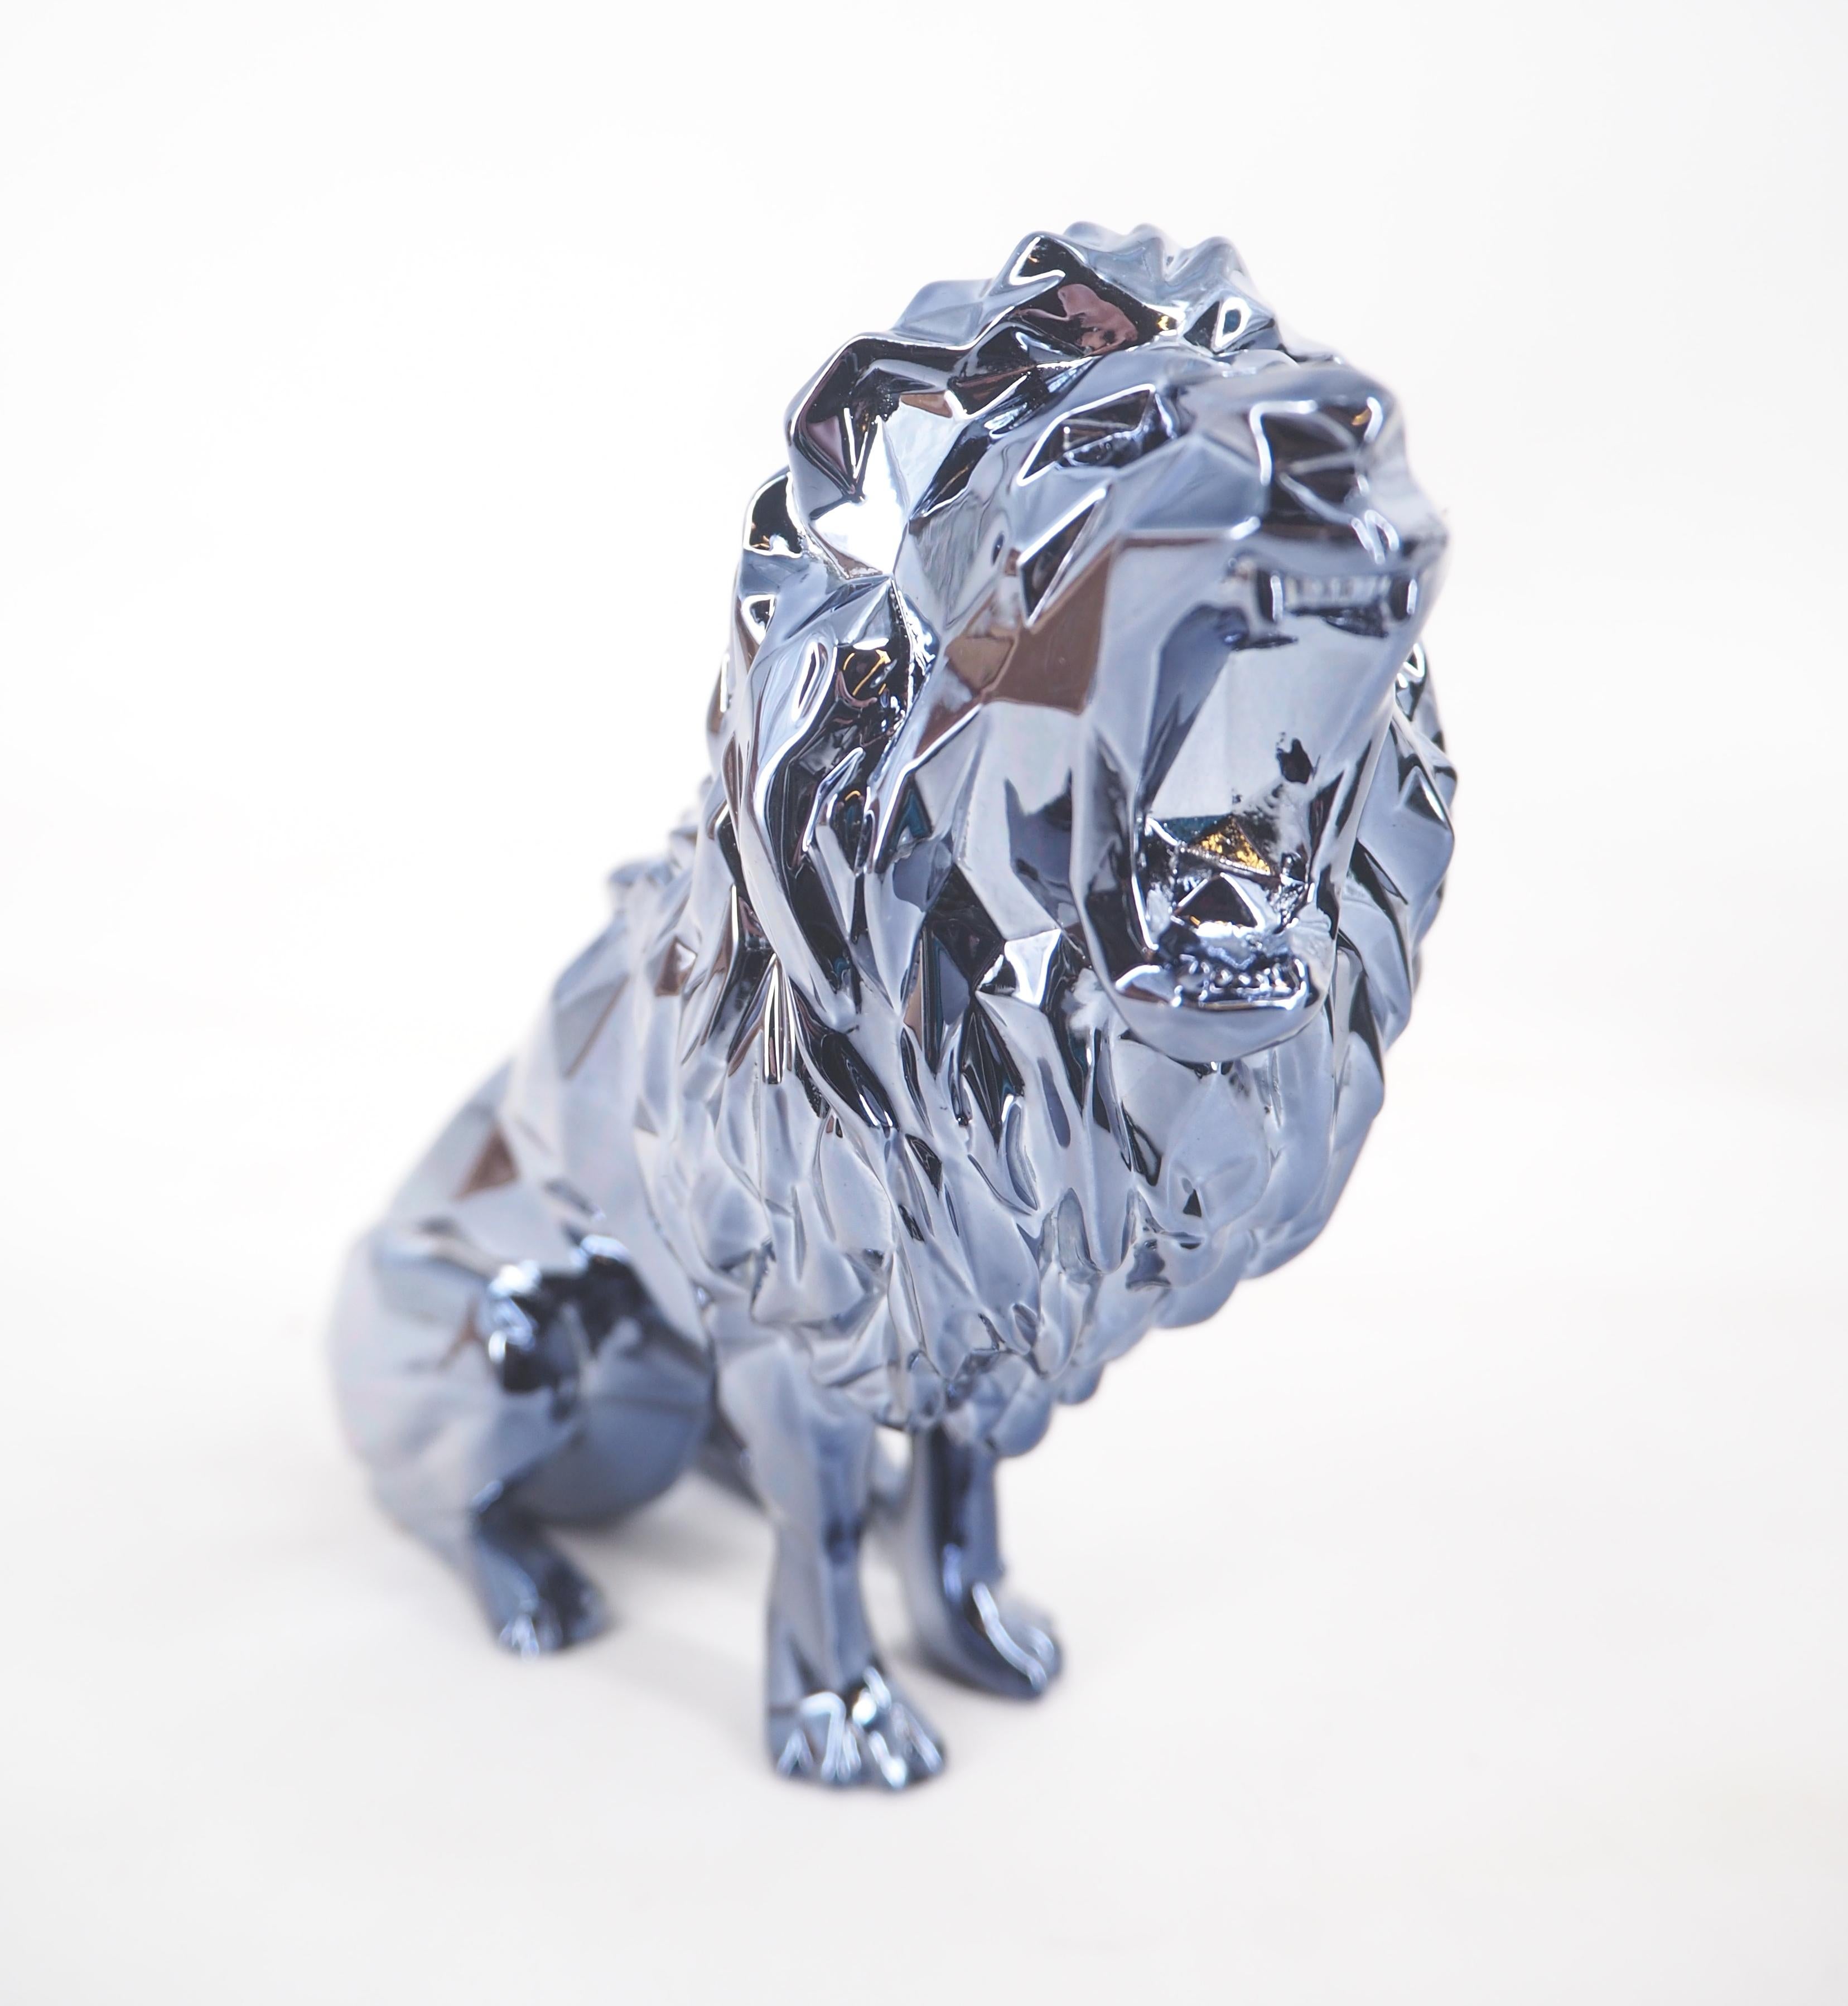 Roaring Lion Spirit (Petrol edition) - Sculpture dans sa boîte d'origine avec certificat d'artiste.